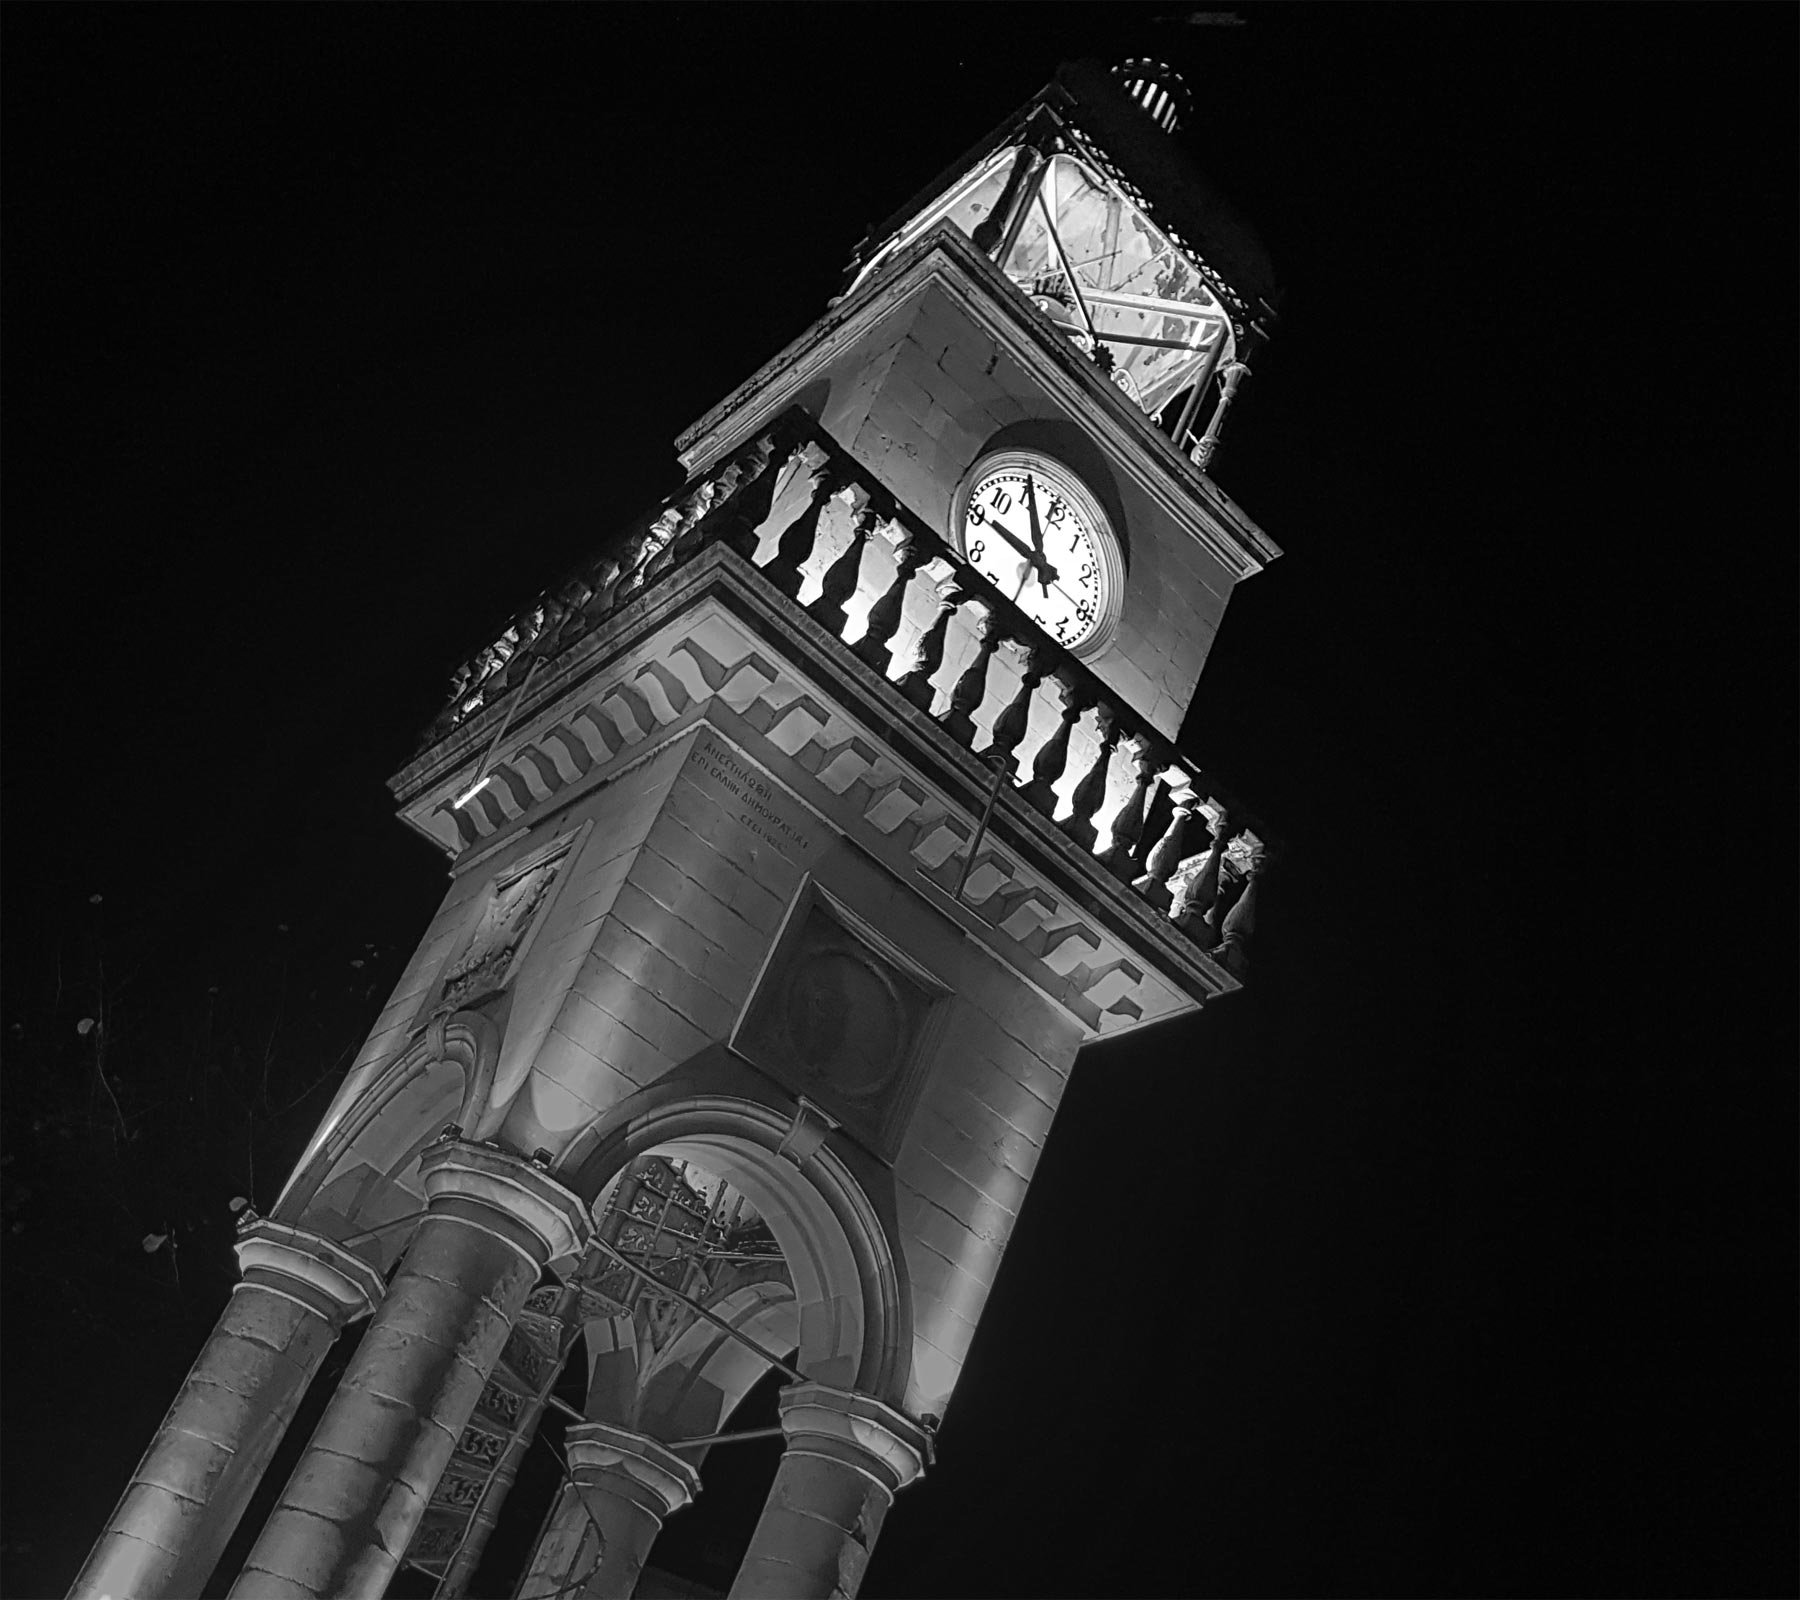 THE CLOCK TOWER OF IOANNINA...